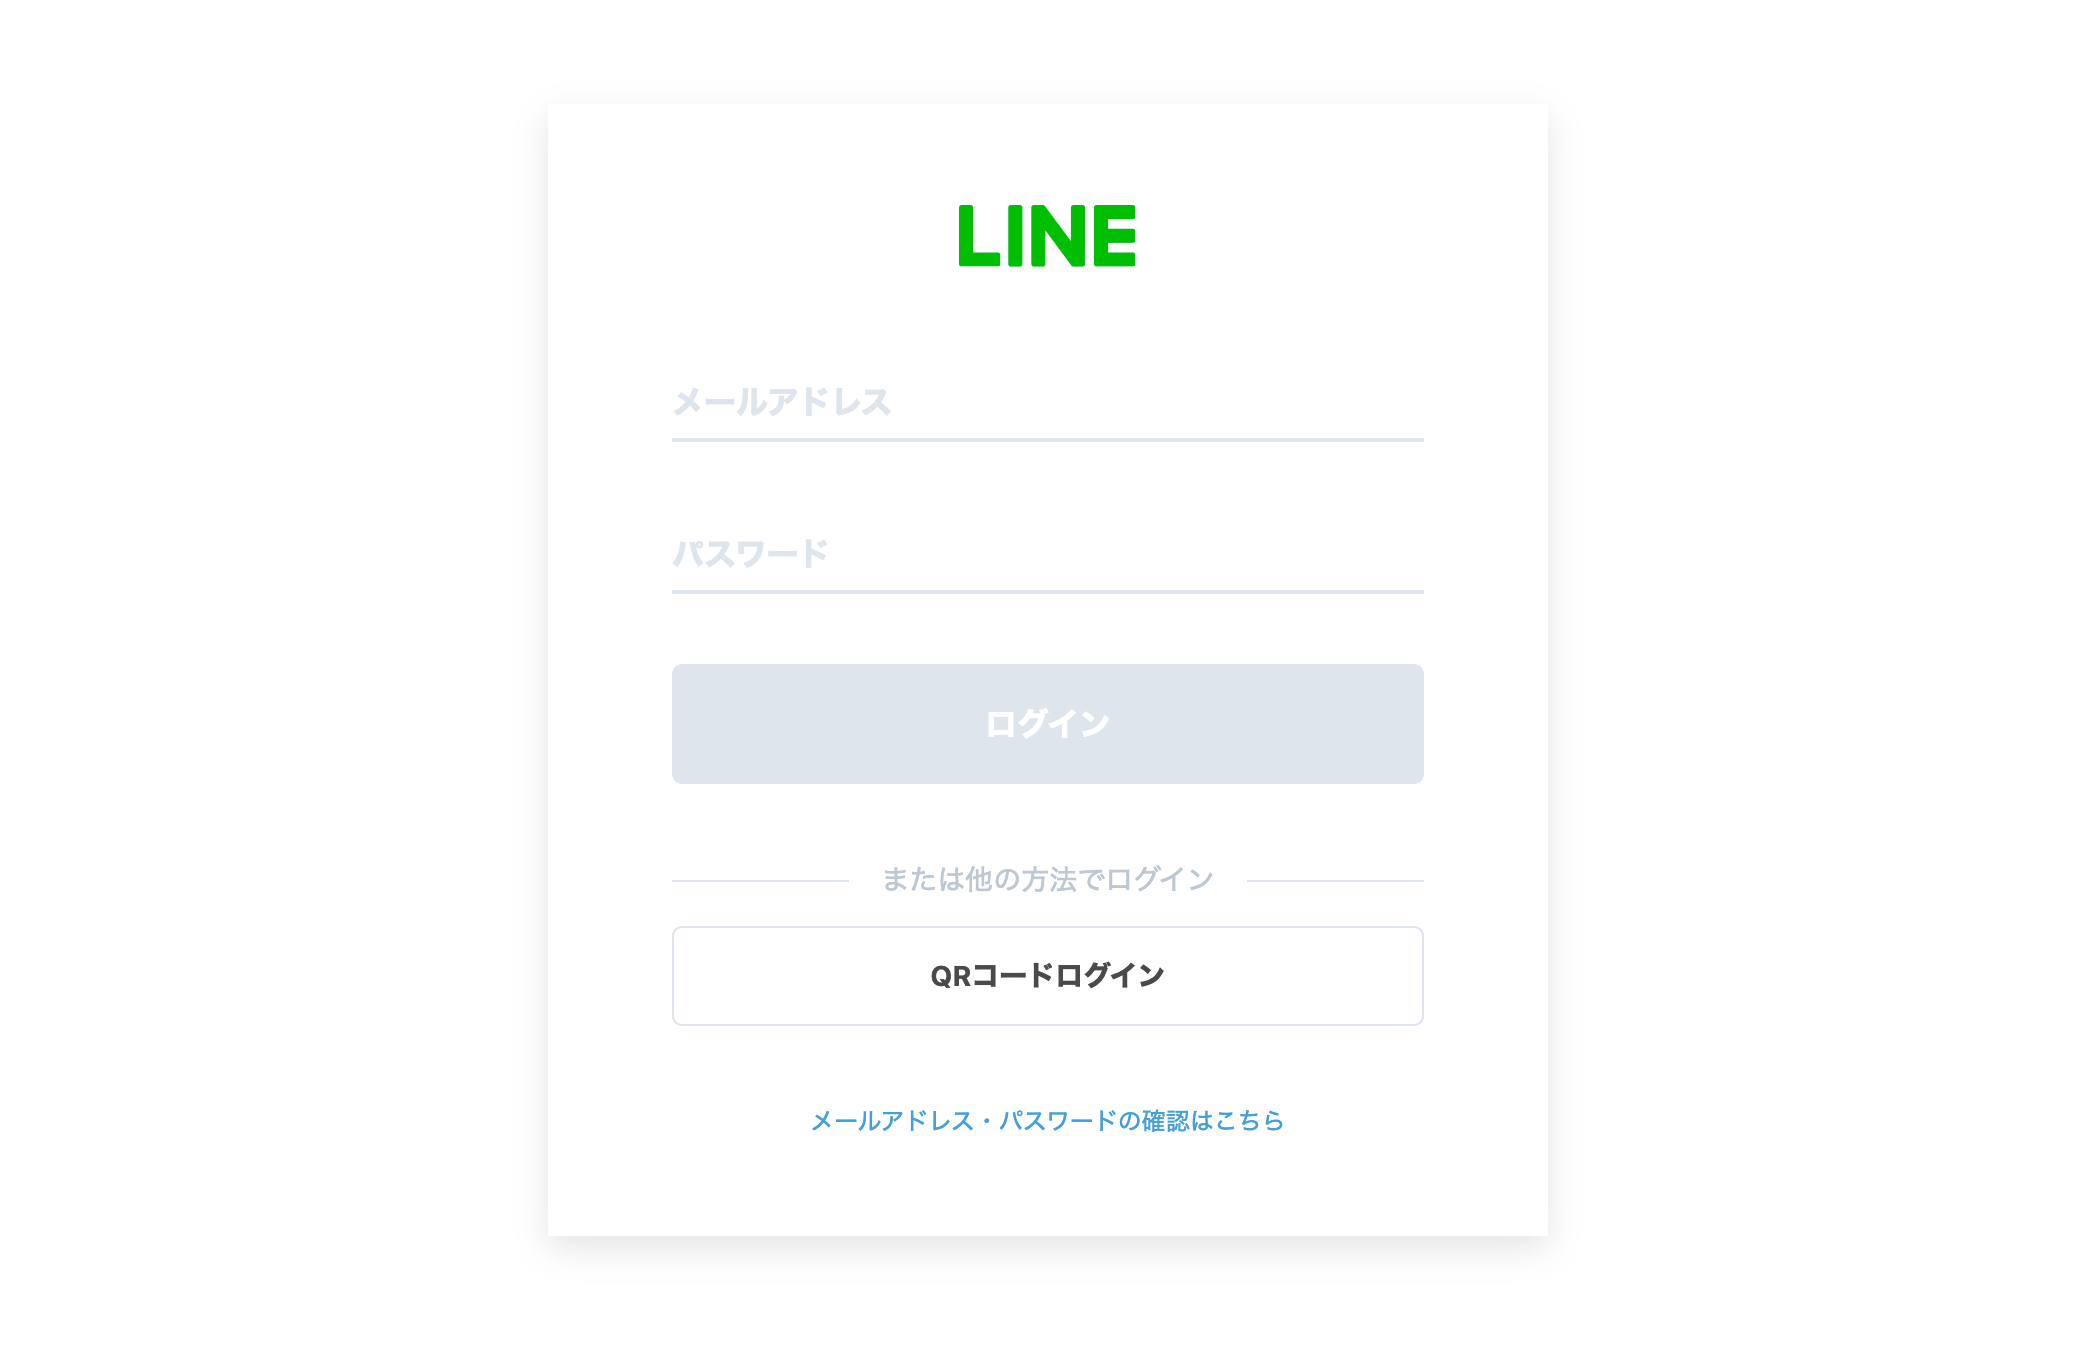 LINE Notifyにログイン